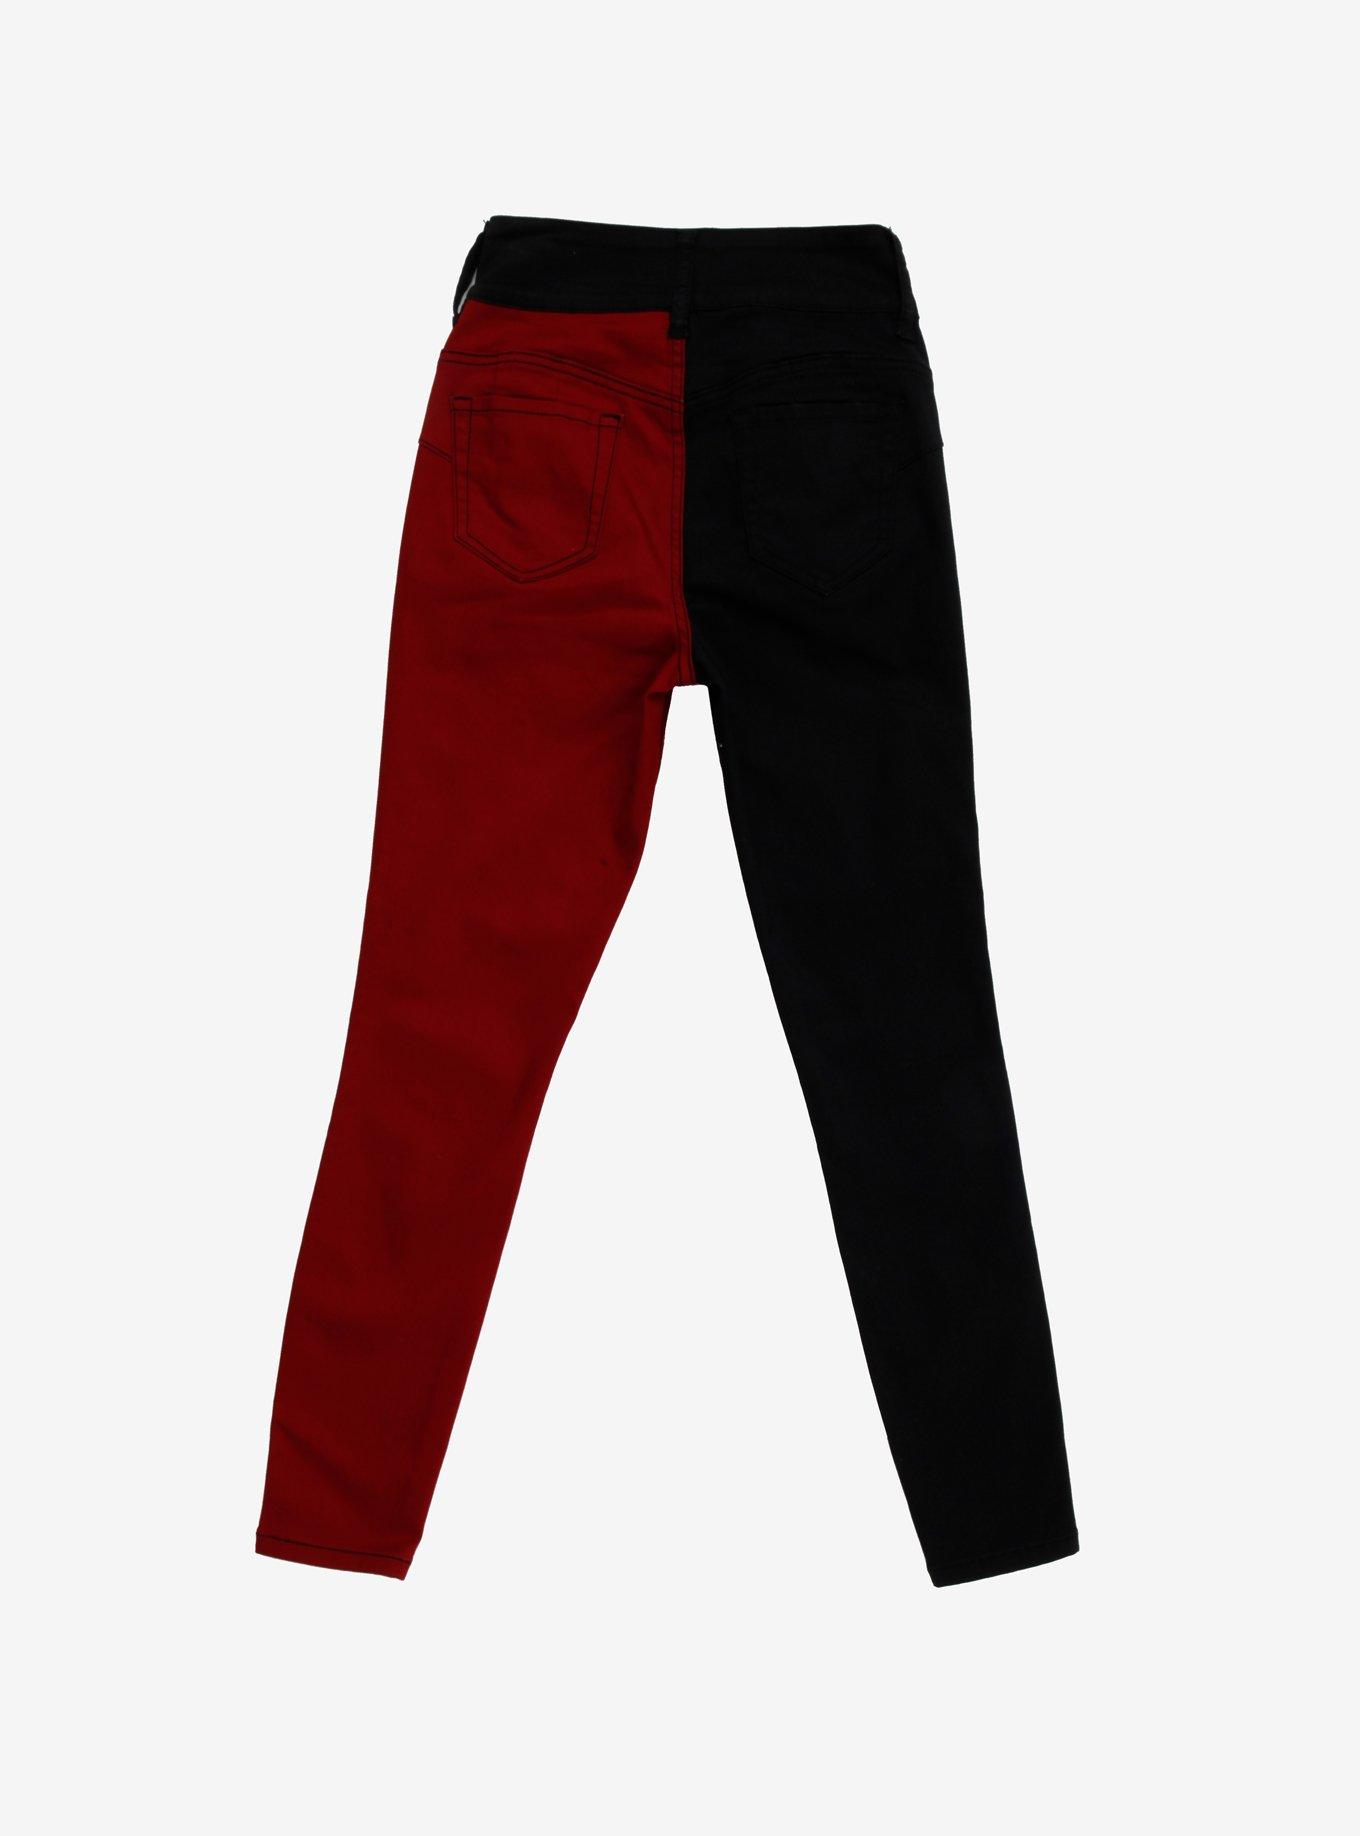 HT Denim Red & Black Split Leg Hi-Rise Super Skinny Jeans, MULTI, alternate